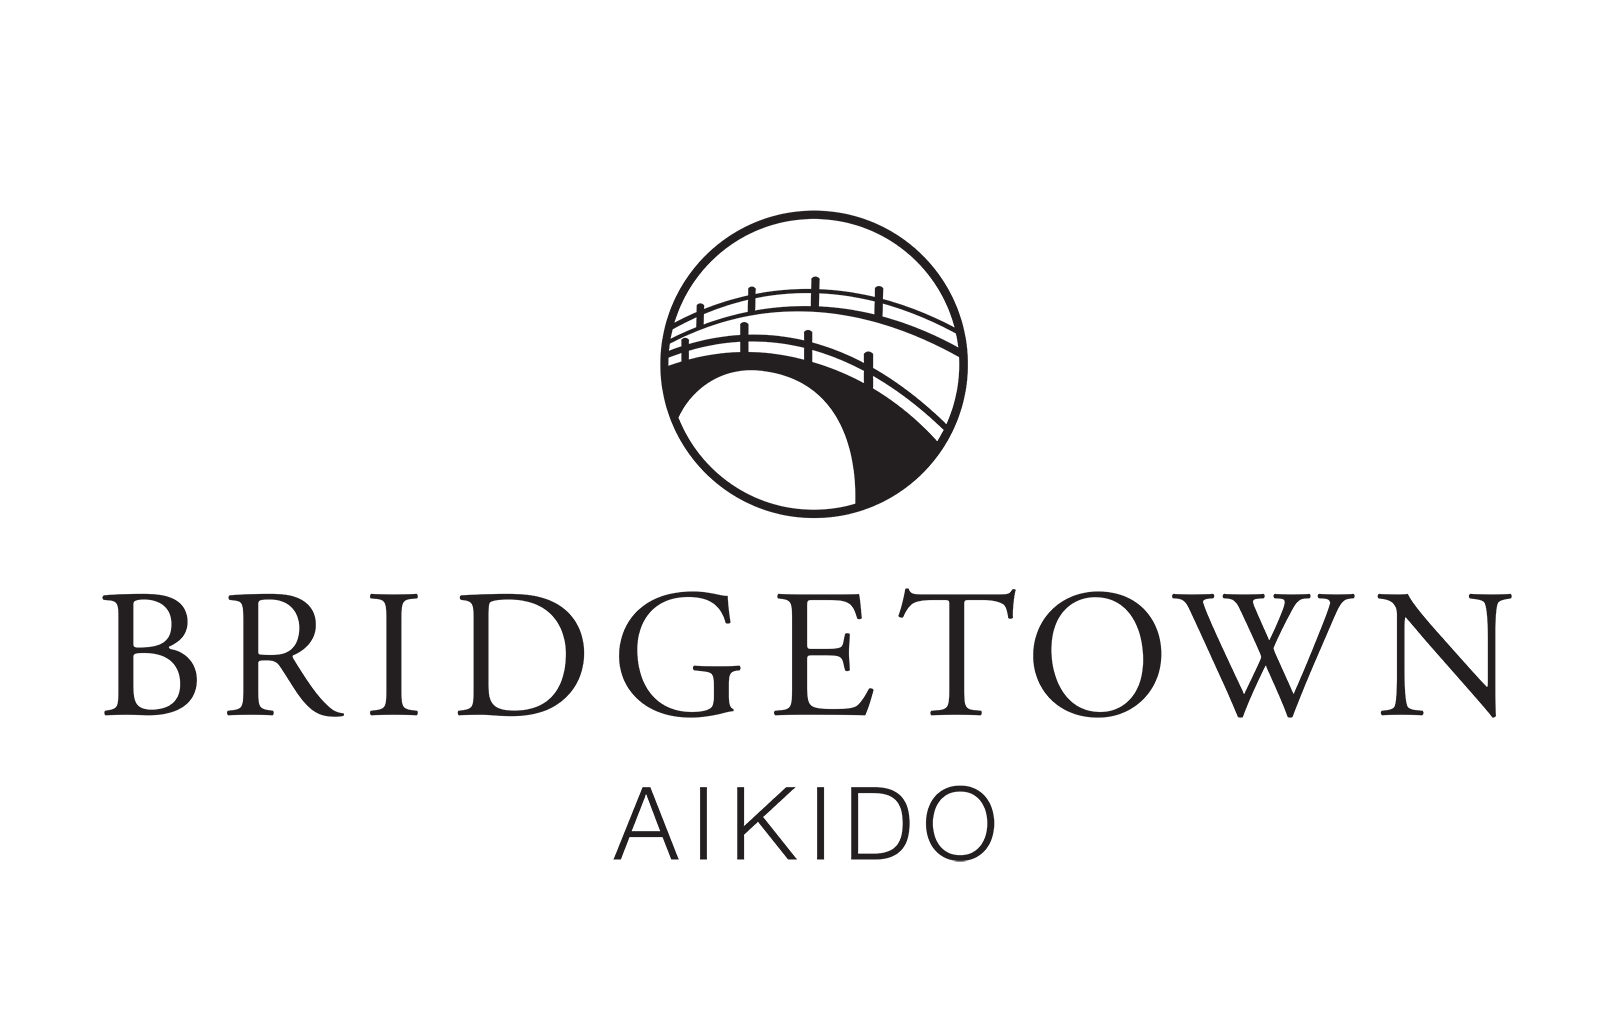 Bridgetown Aikido